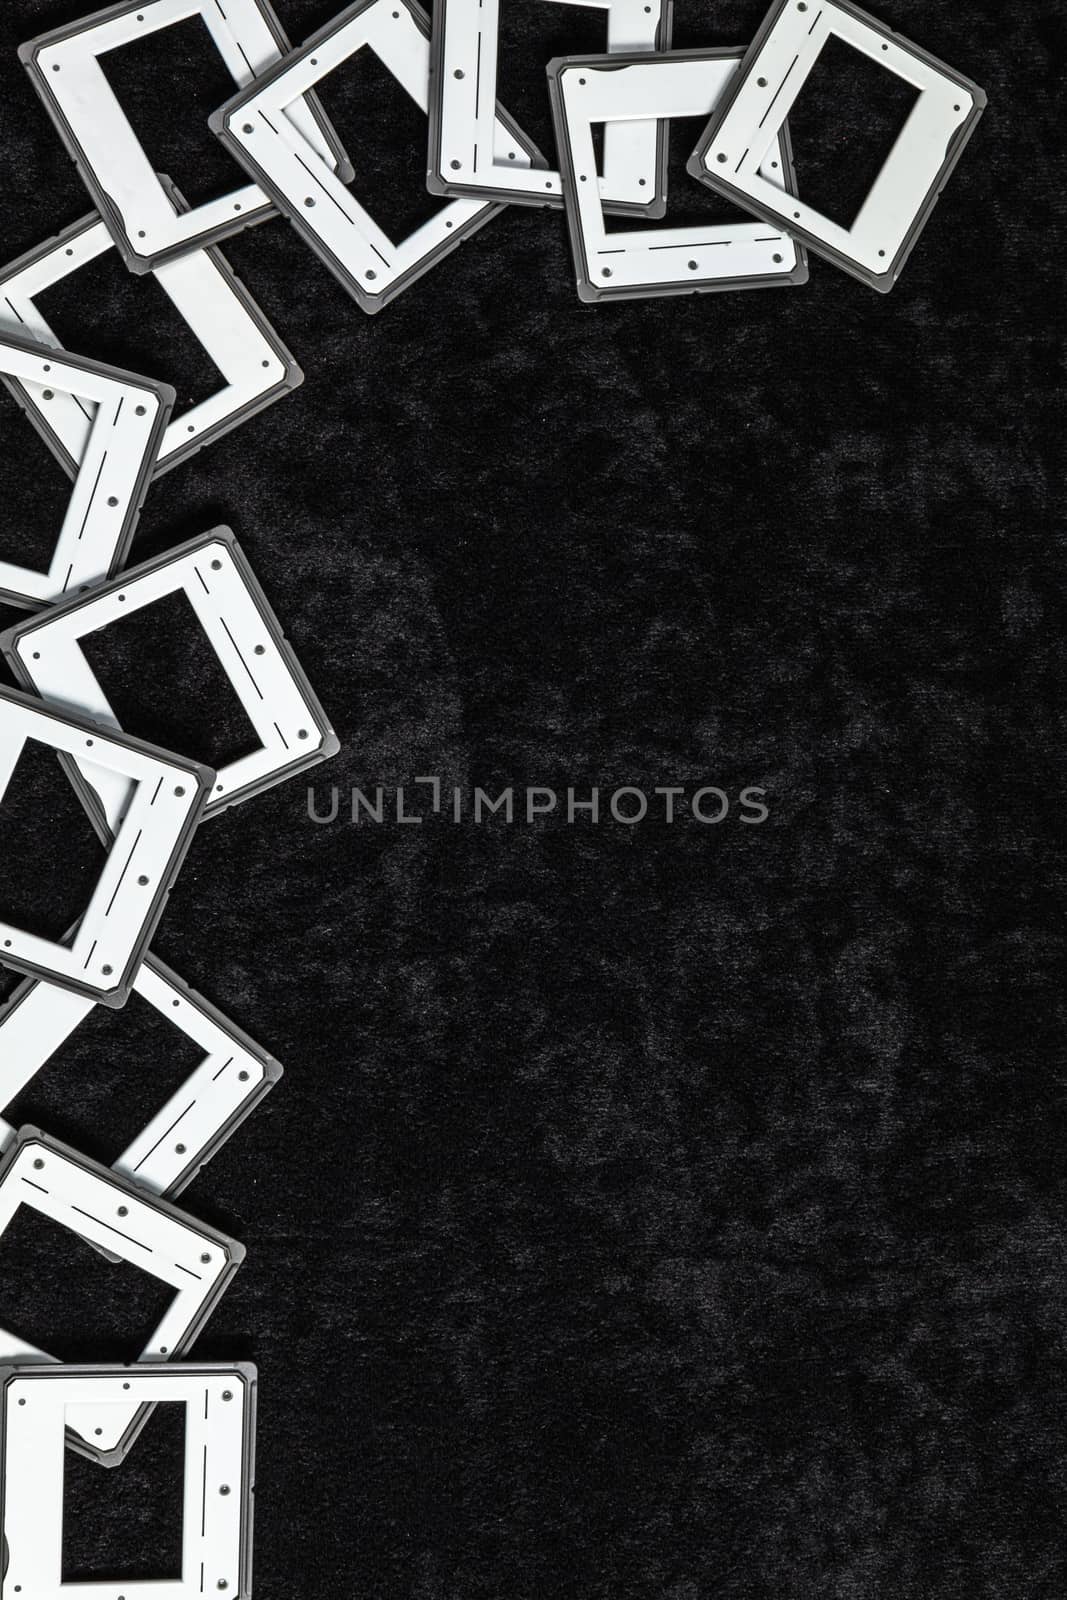 Set of vintage slice on a black background for photographic concepts